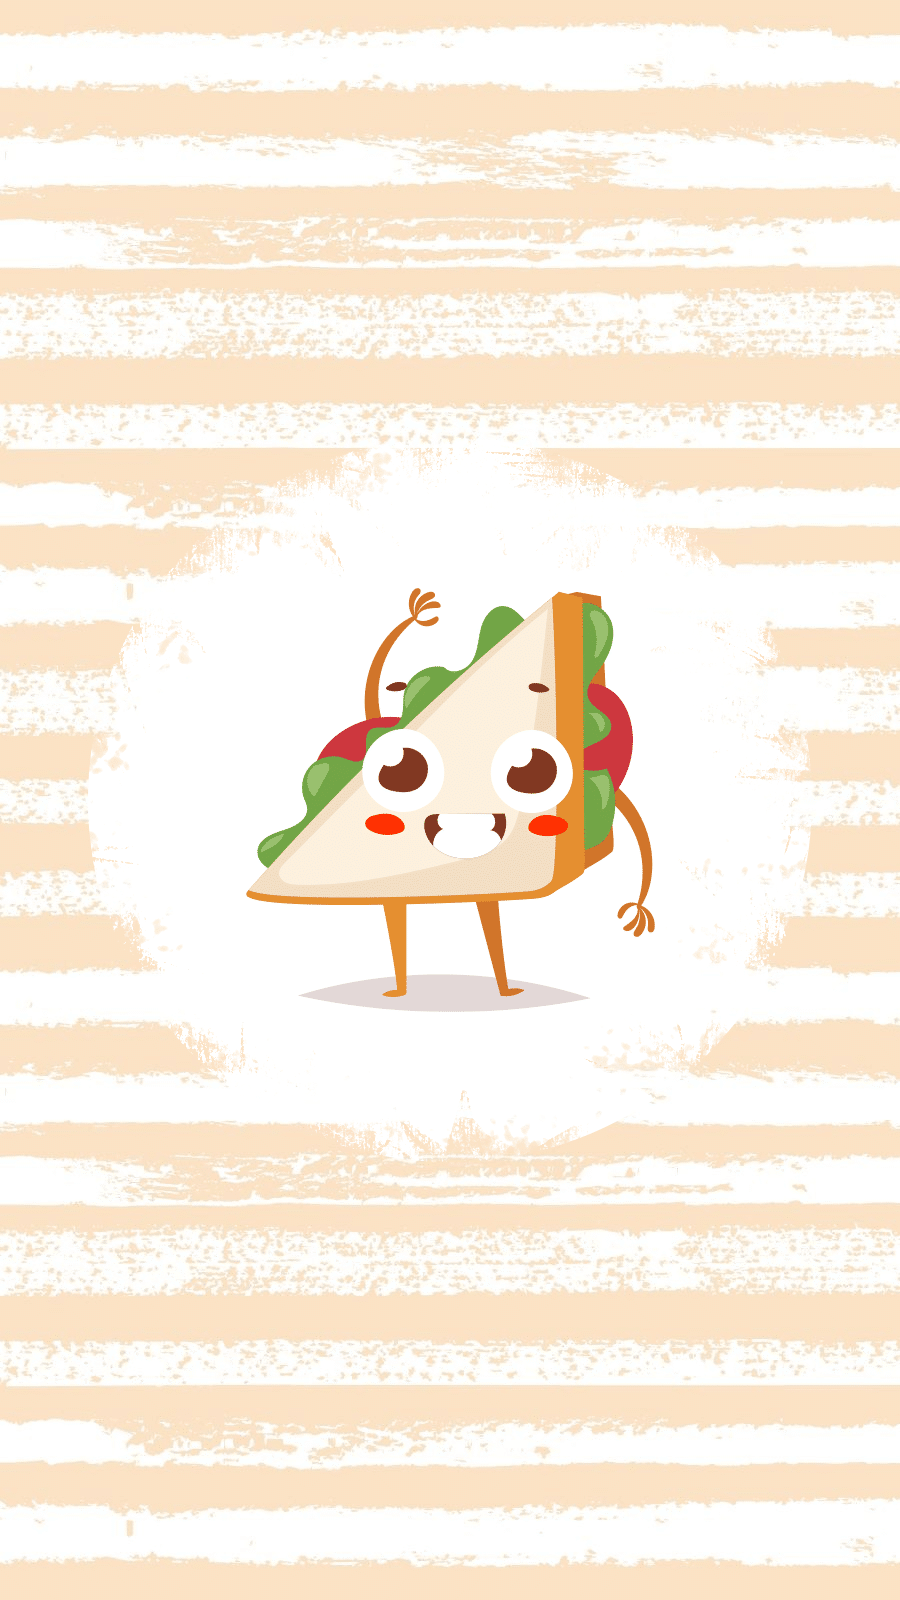 Stripe Backgorund Fast Food Smile Sandwich Cartoon Illustration Instagram Highlight